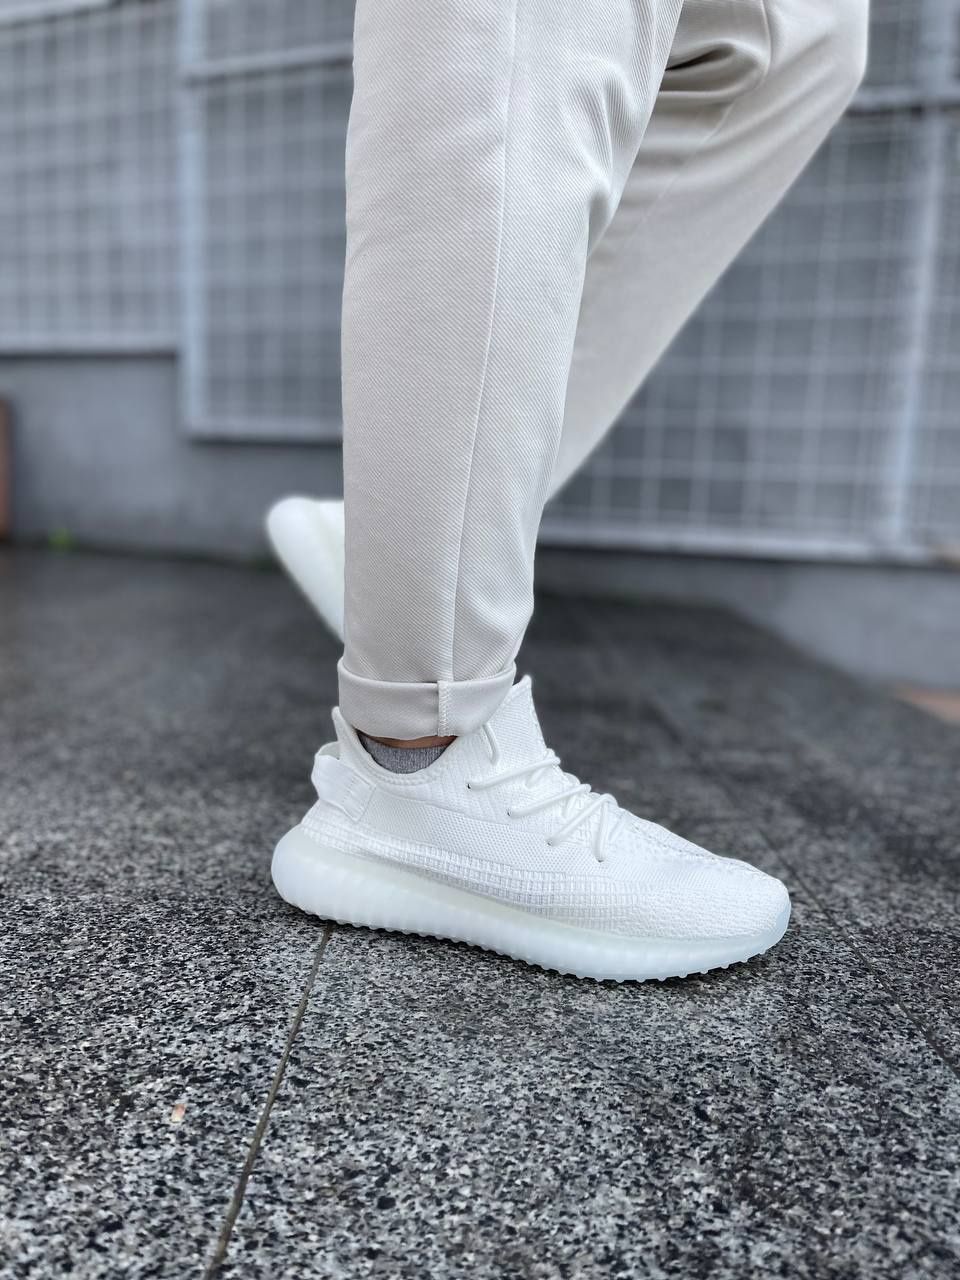 Adidas Yeezy boost 350 white